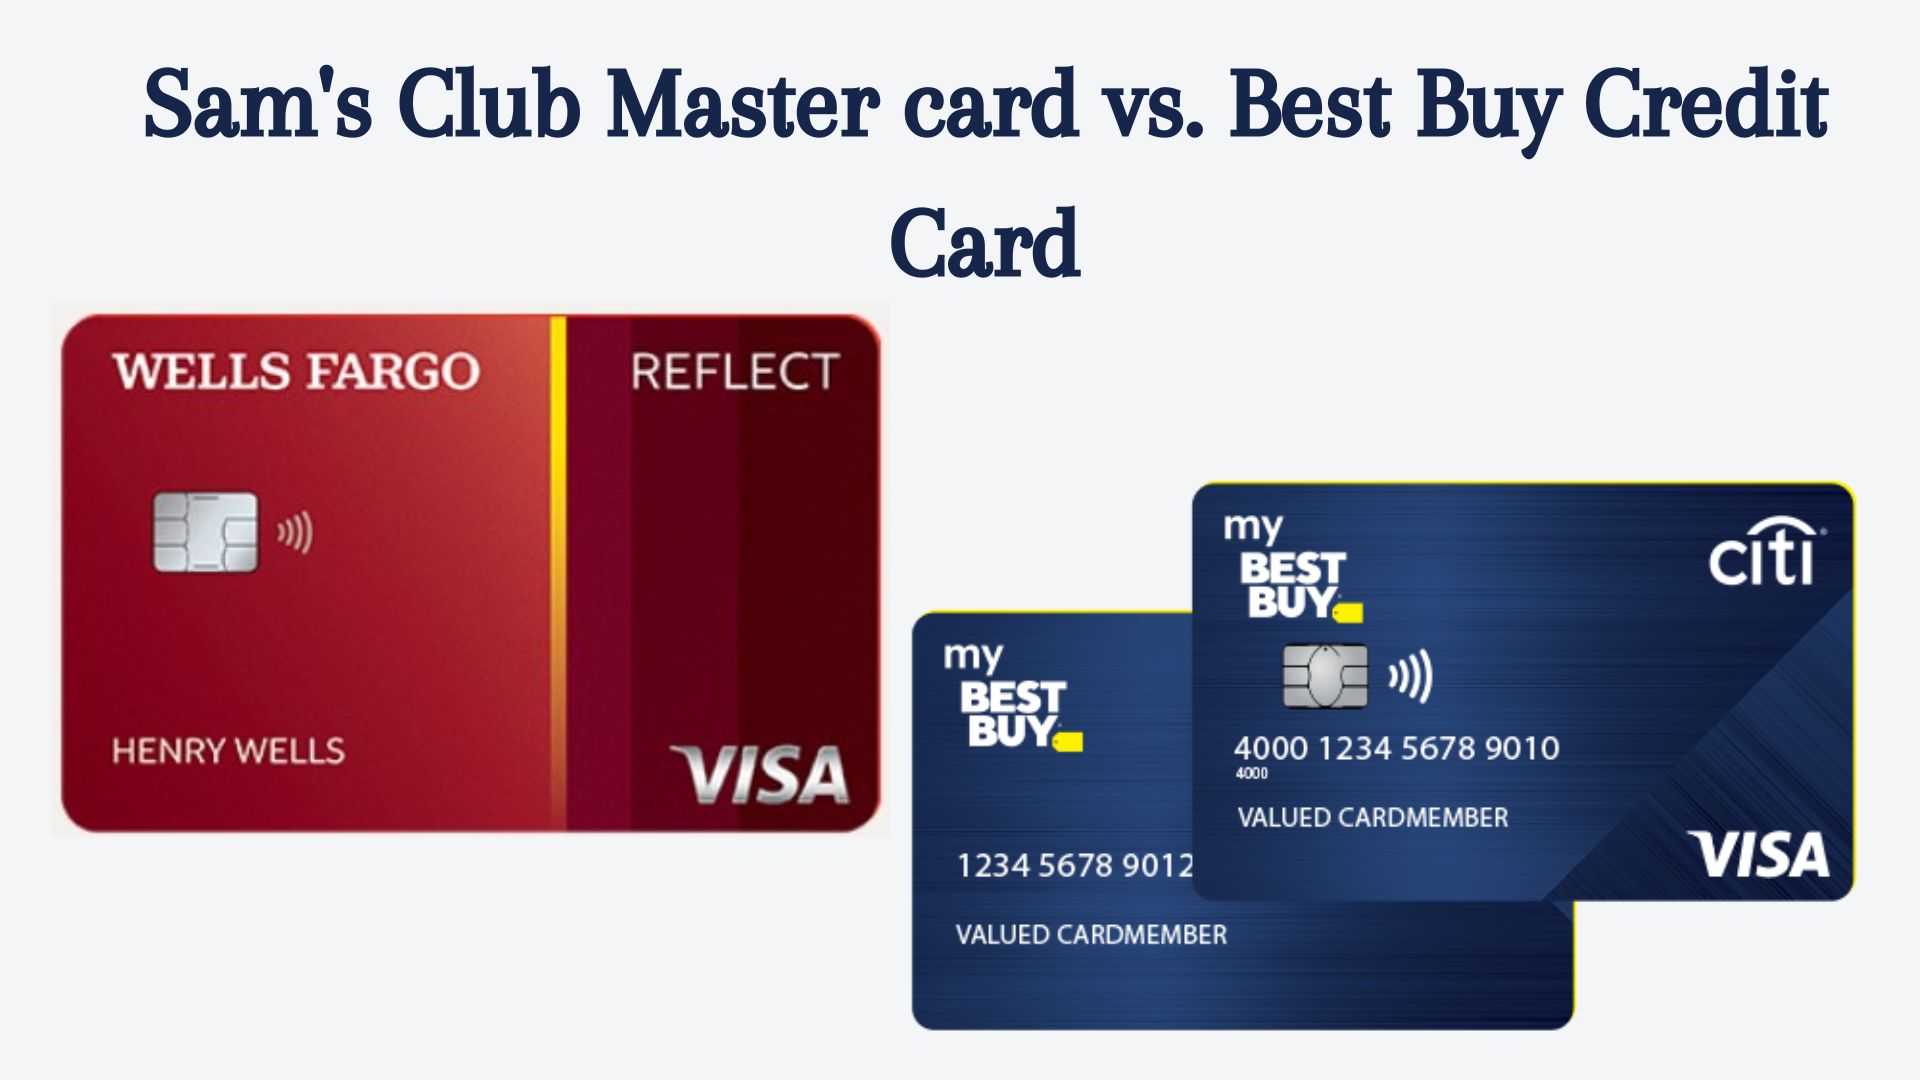 Sam's Club Mastercard vs. Best Buy Credit Card